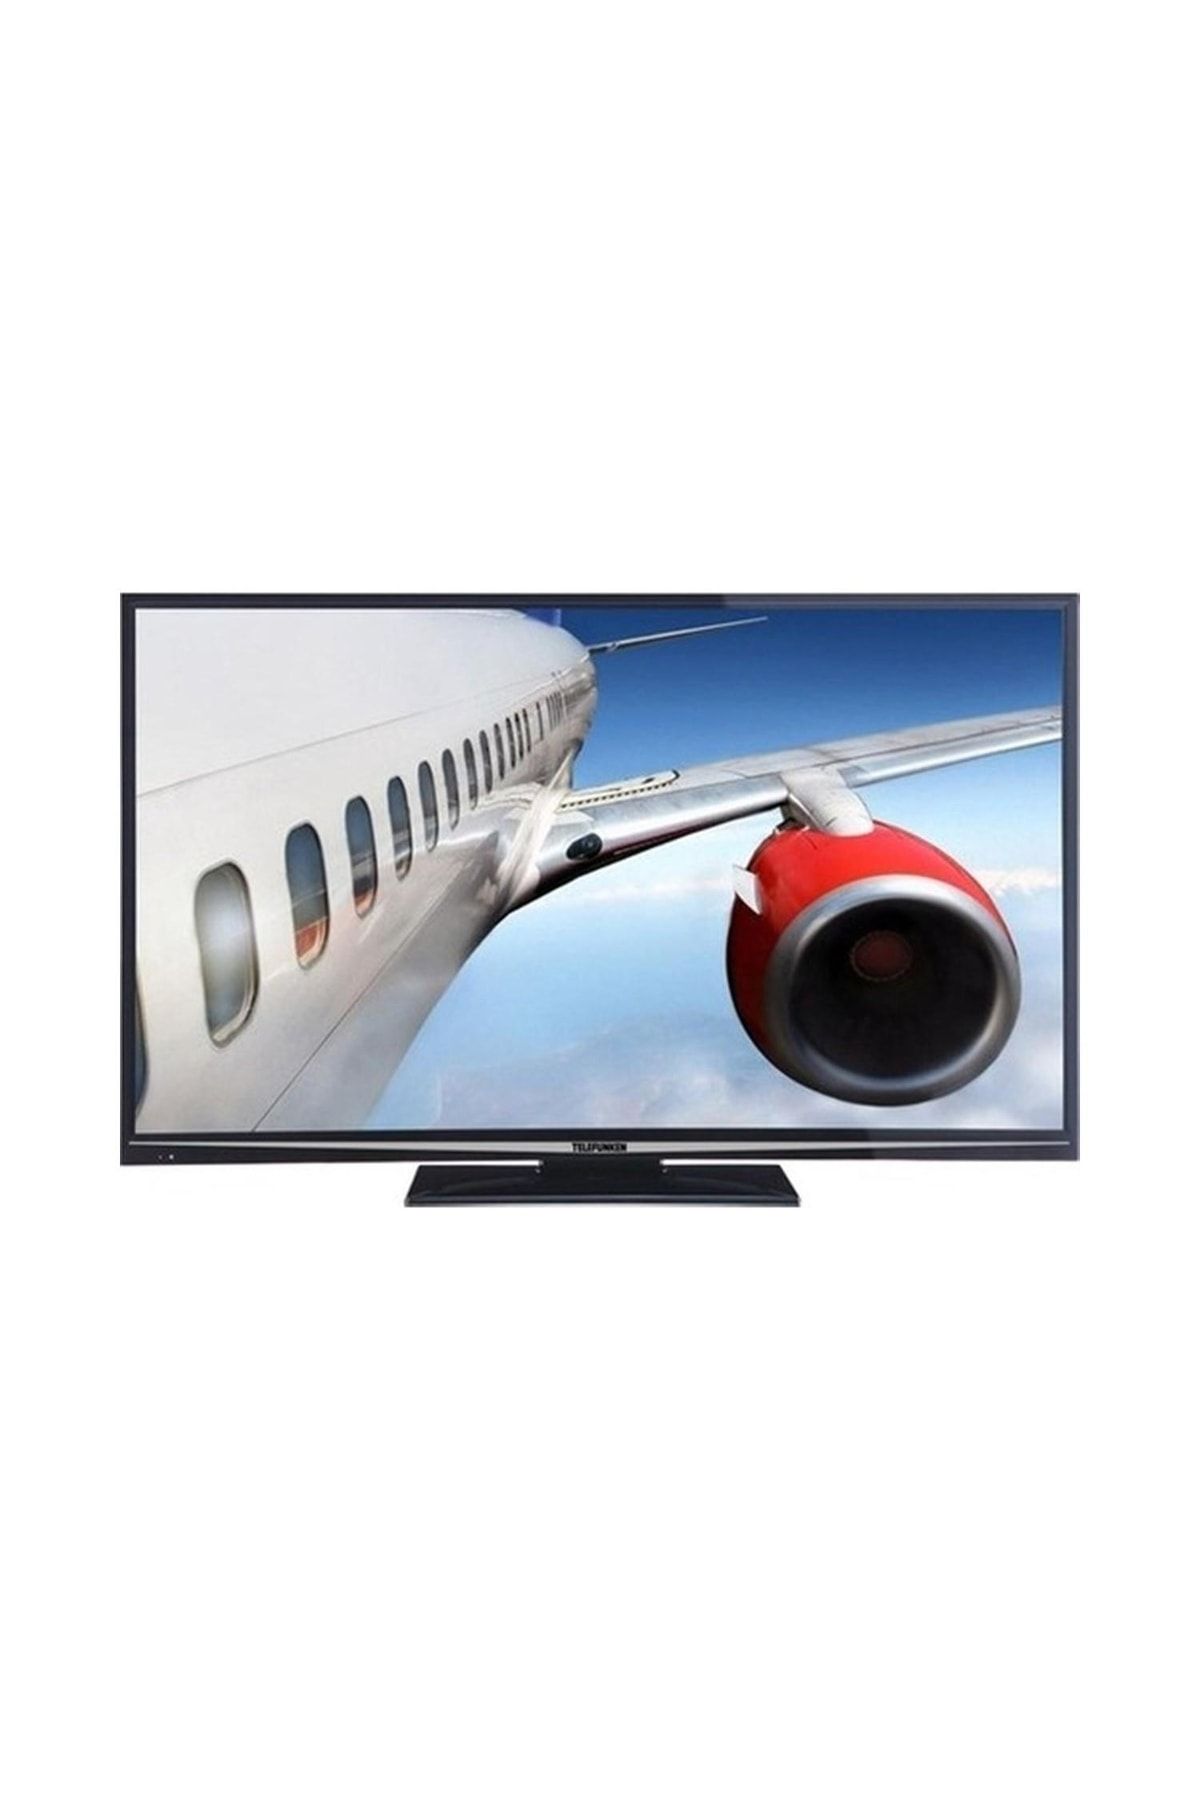 CONTINENTAL EDISON DLED49B3 TV LED Full HD 122cm ( CONTINENTAL EDISON